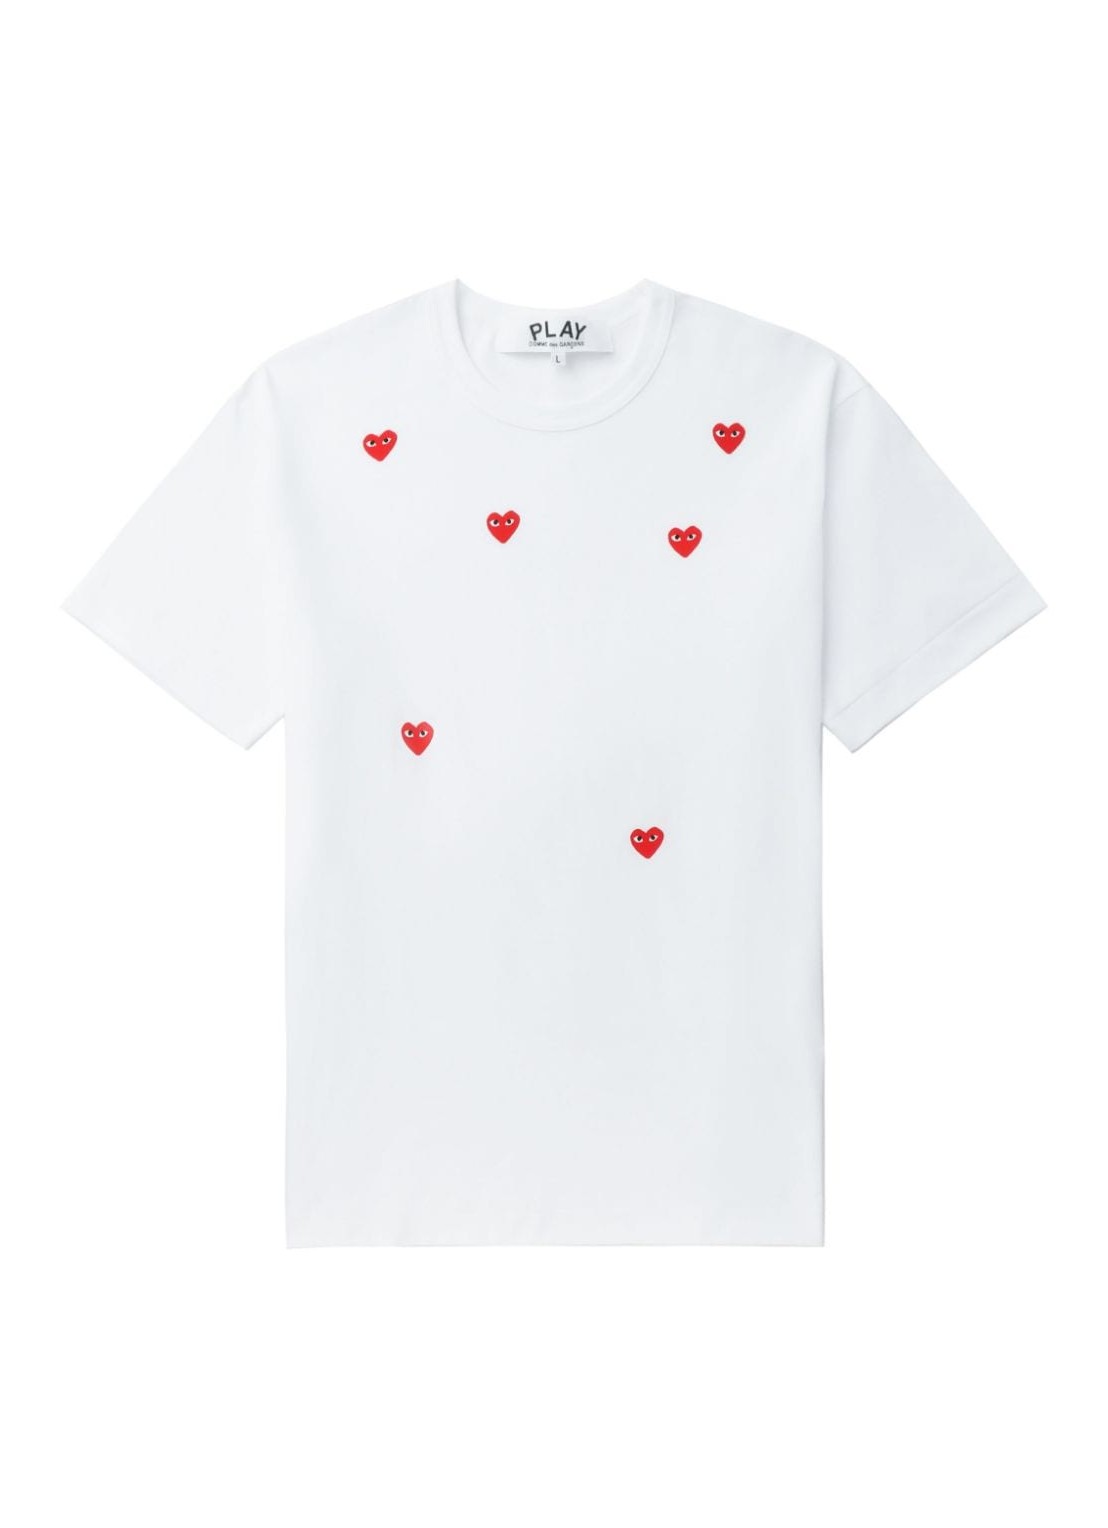 Camiseta comme des garcons t-shirt manmany heart short sleeve t-shirt - axt338051 white talla L
 